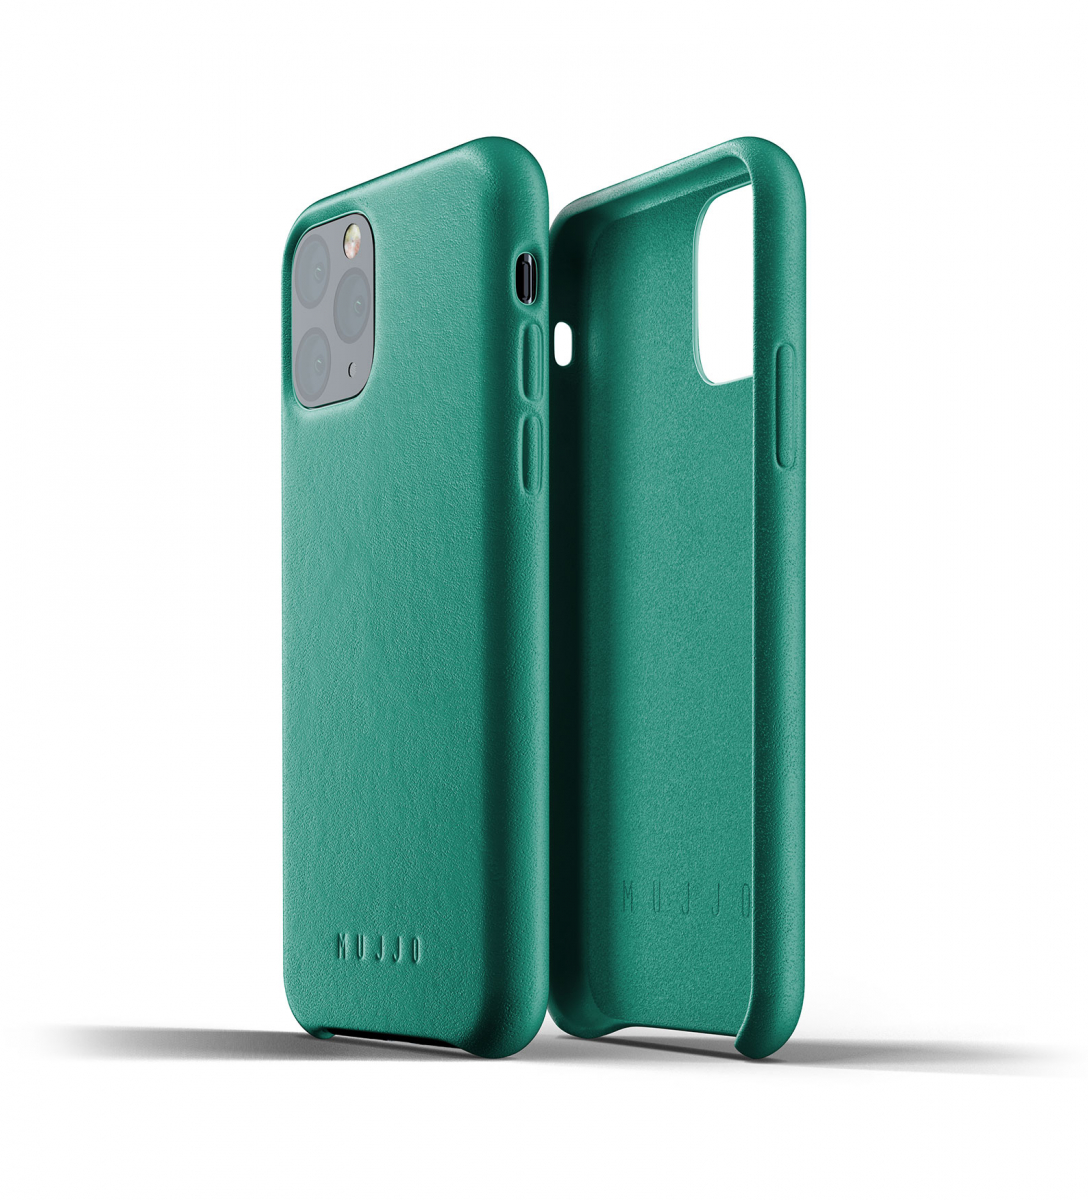 Чехол кожаный MUJJO для iPhone 11 Pro Full Leather, Alpine Green